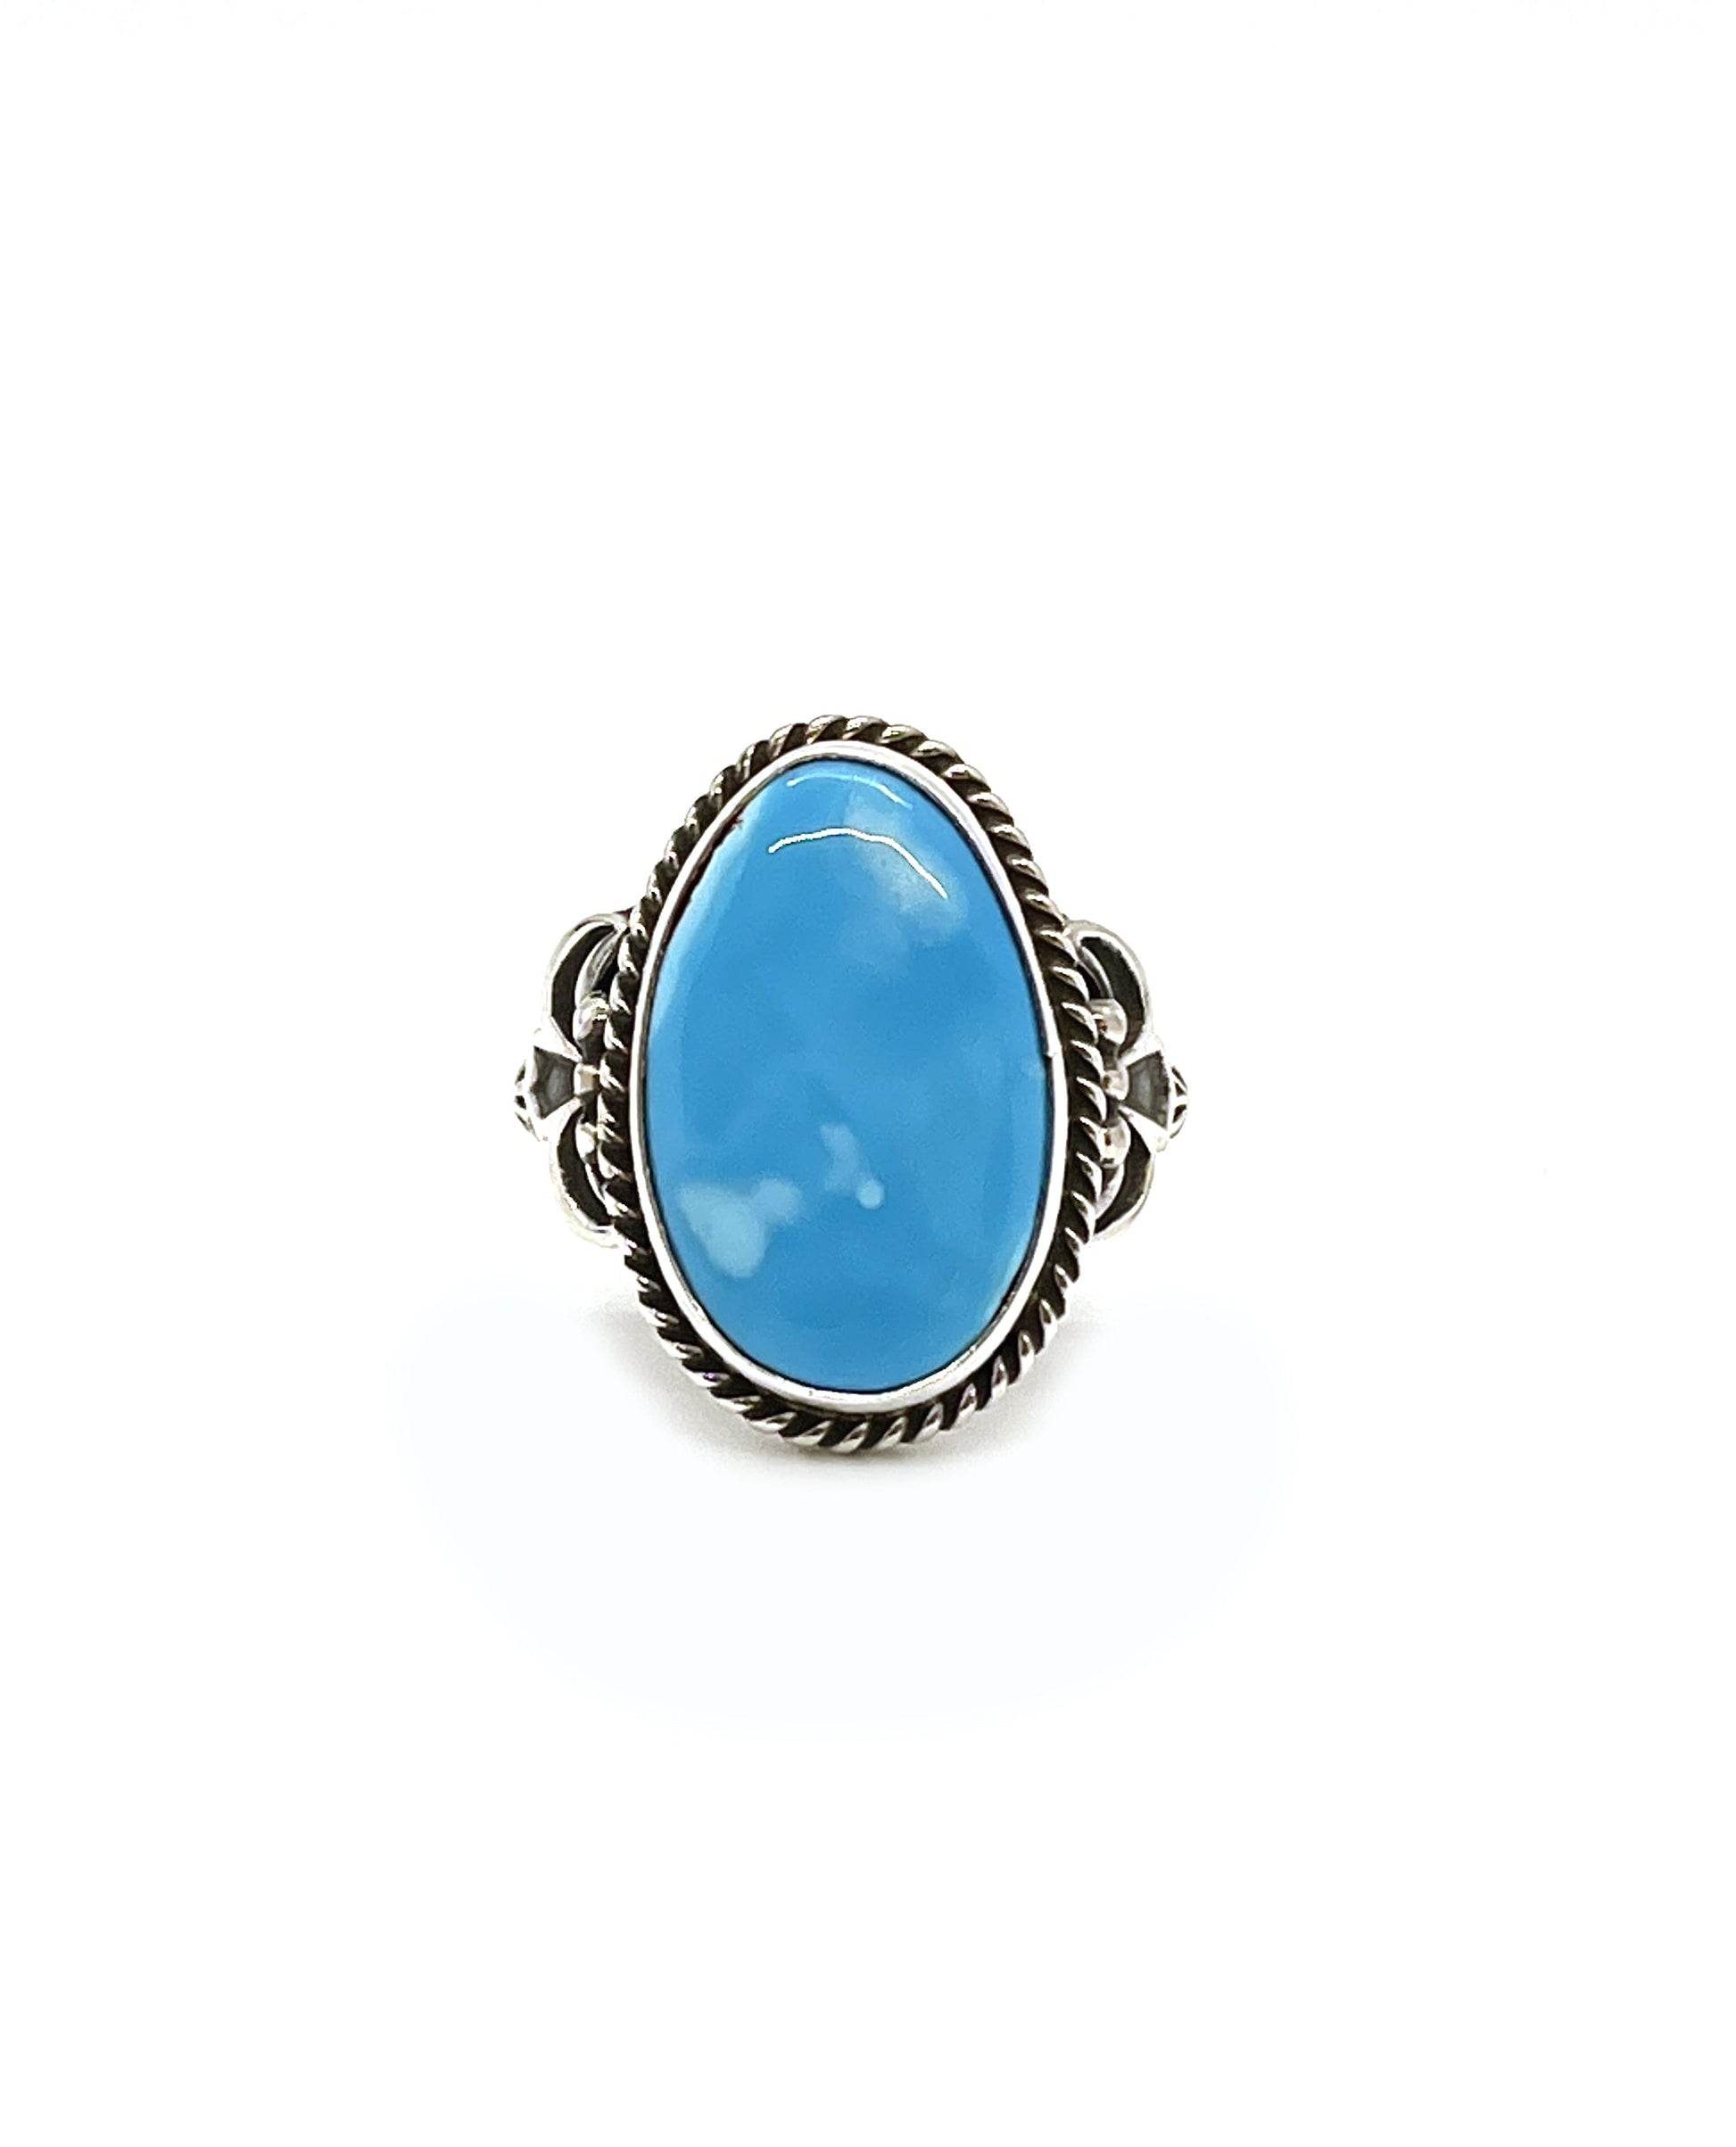 Sleeping Beauty Turquoise Ring-jewelry-Kaizen-Sorrel Sky Gallery